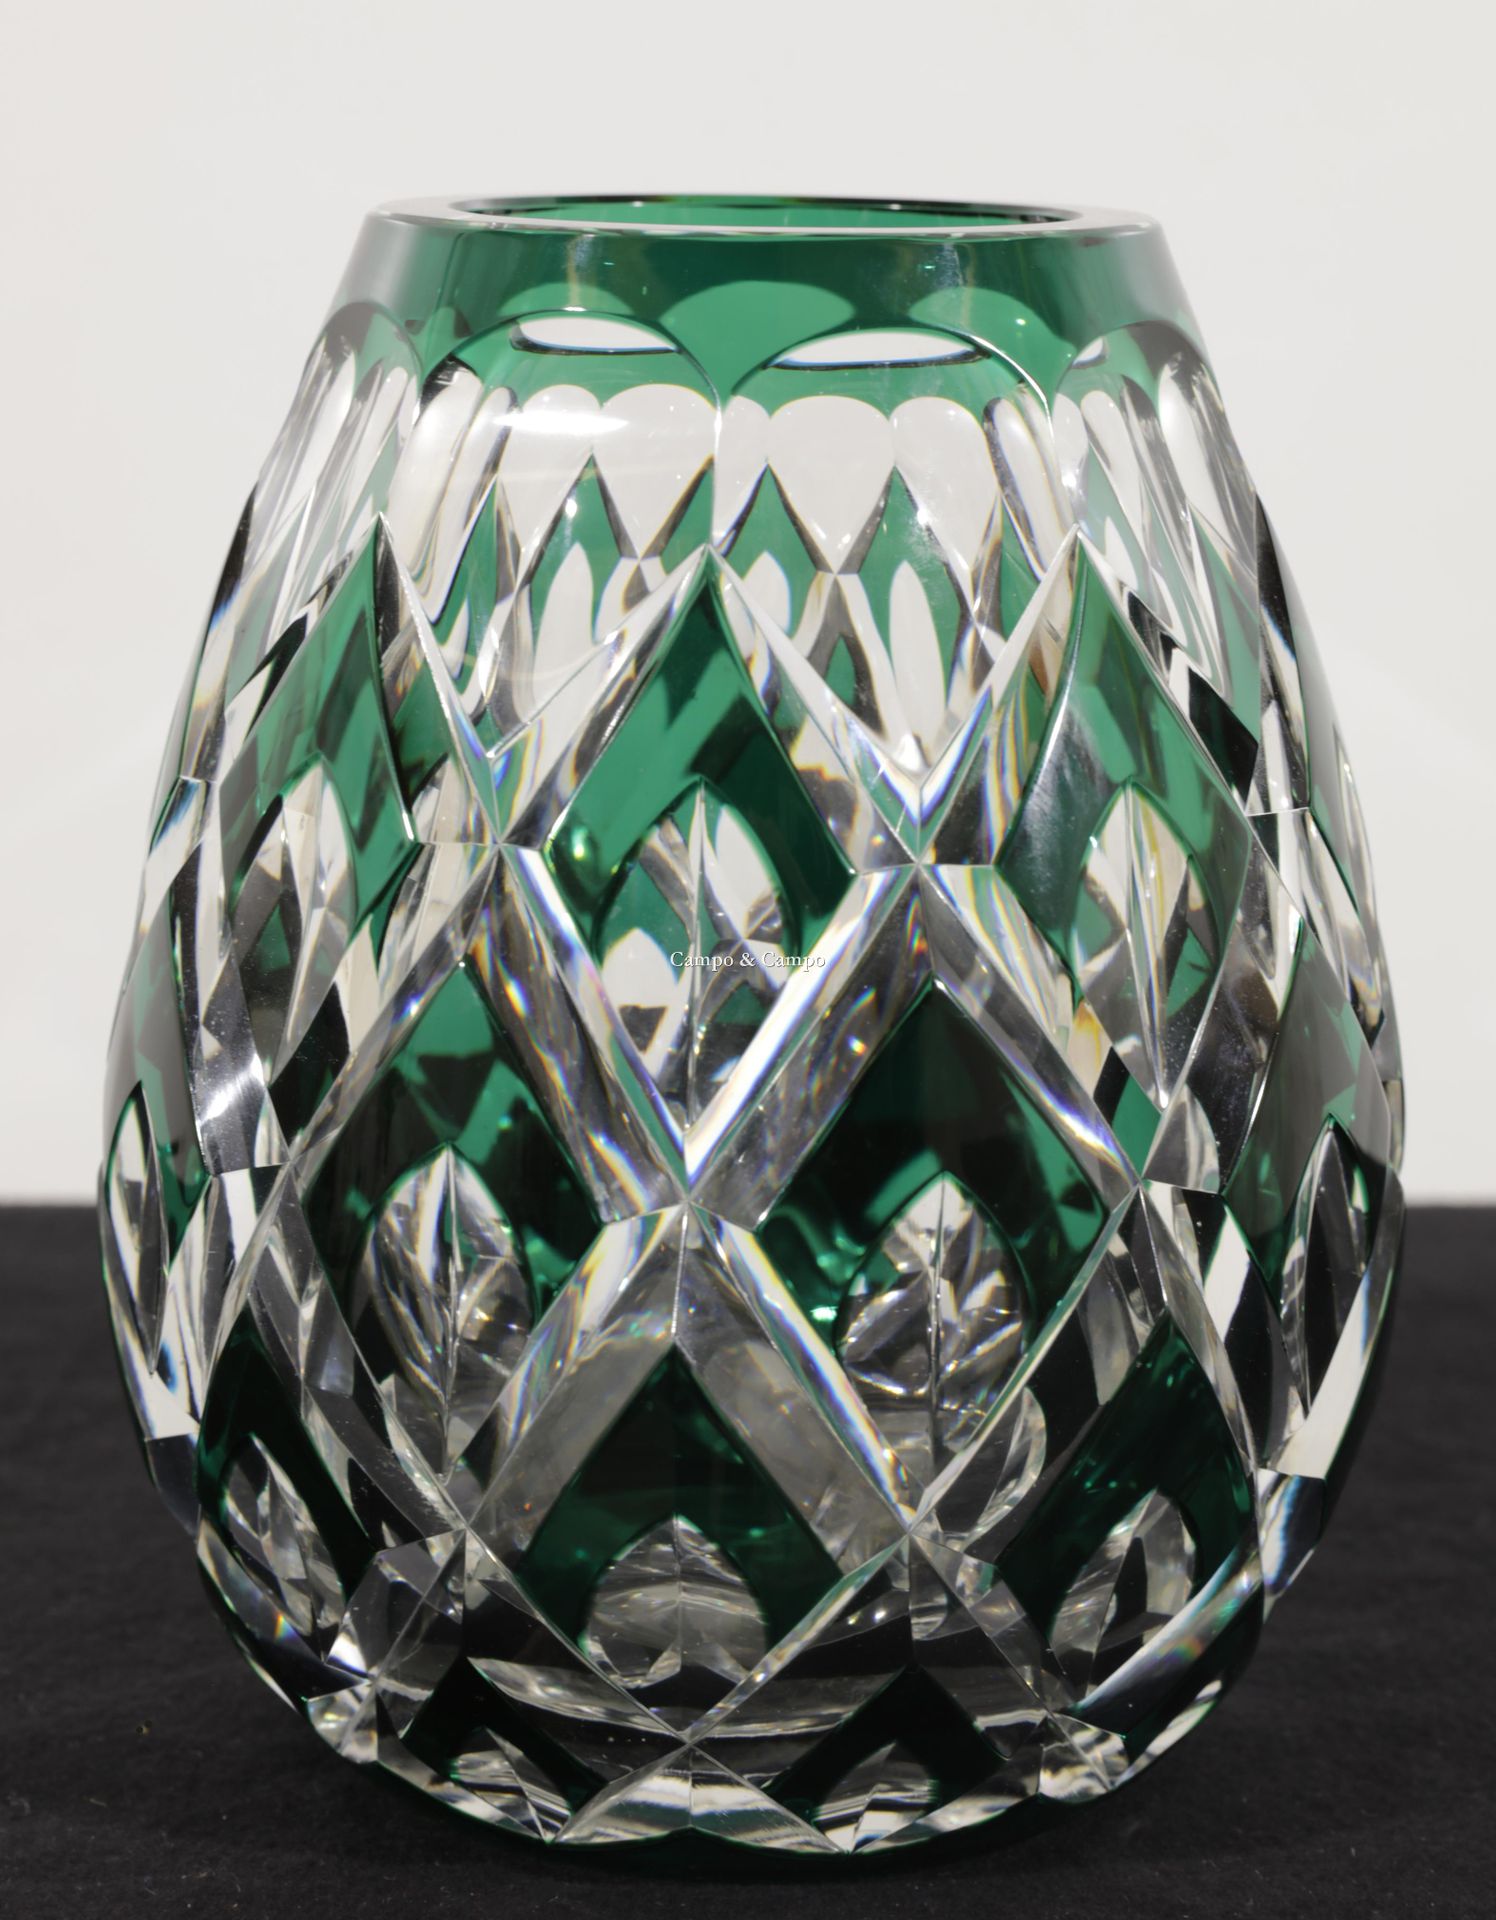 VARIA 1880-1964 Vase Val Saint Lambert in clear and green crystal
Val Saint Lamb&hellip;